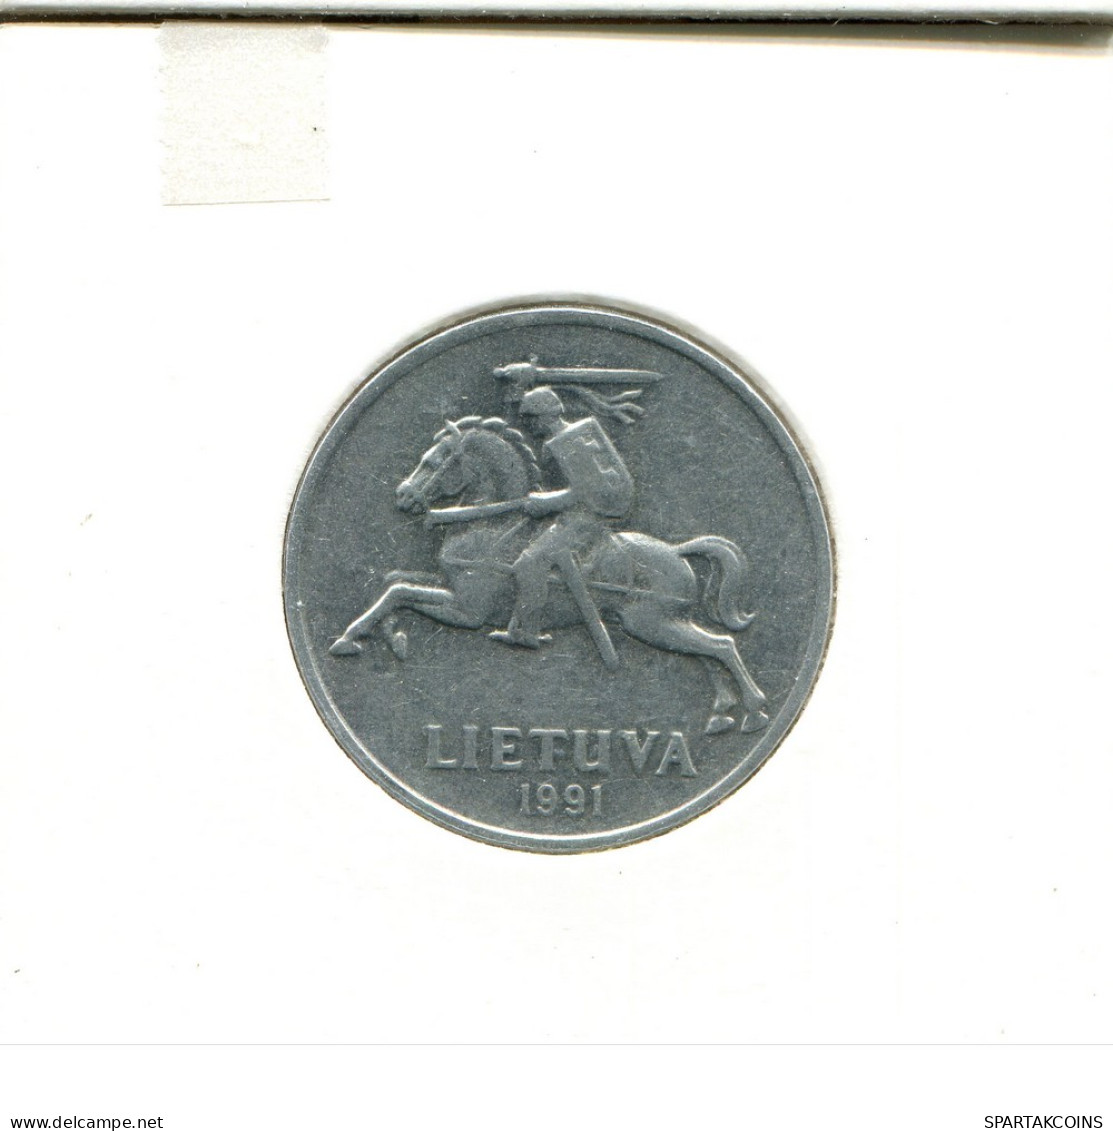 5 CENTAI 1991 LITHUANIA Coin #AS695.U - Lithuania